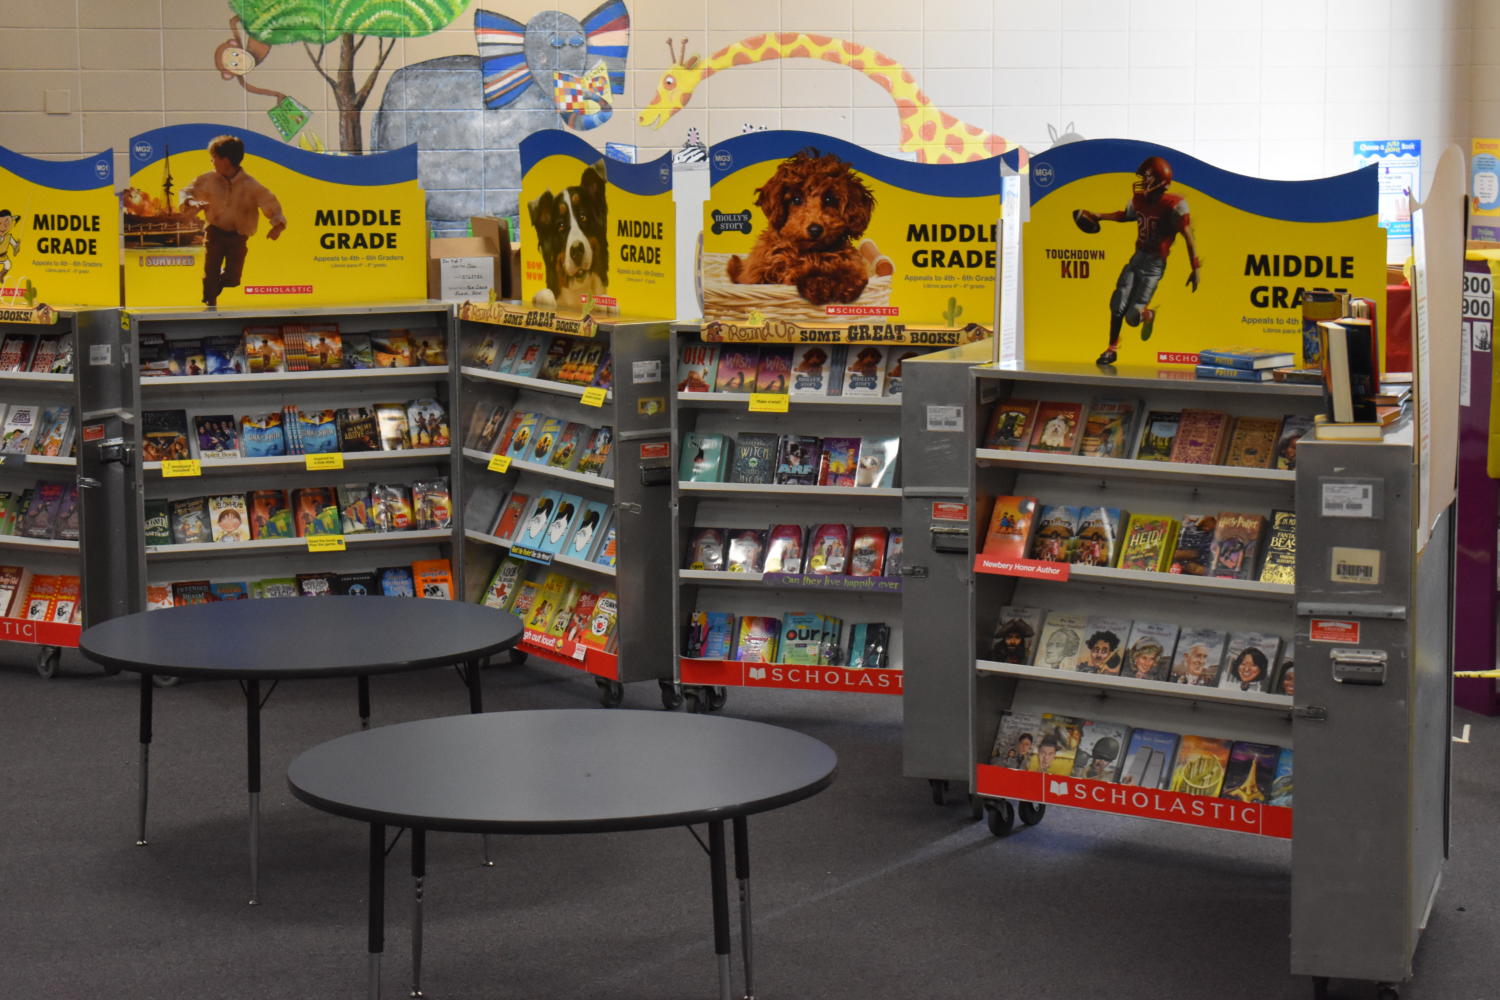 The book fair set up in the Fair Grove Elementary